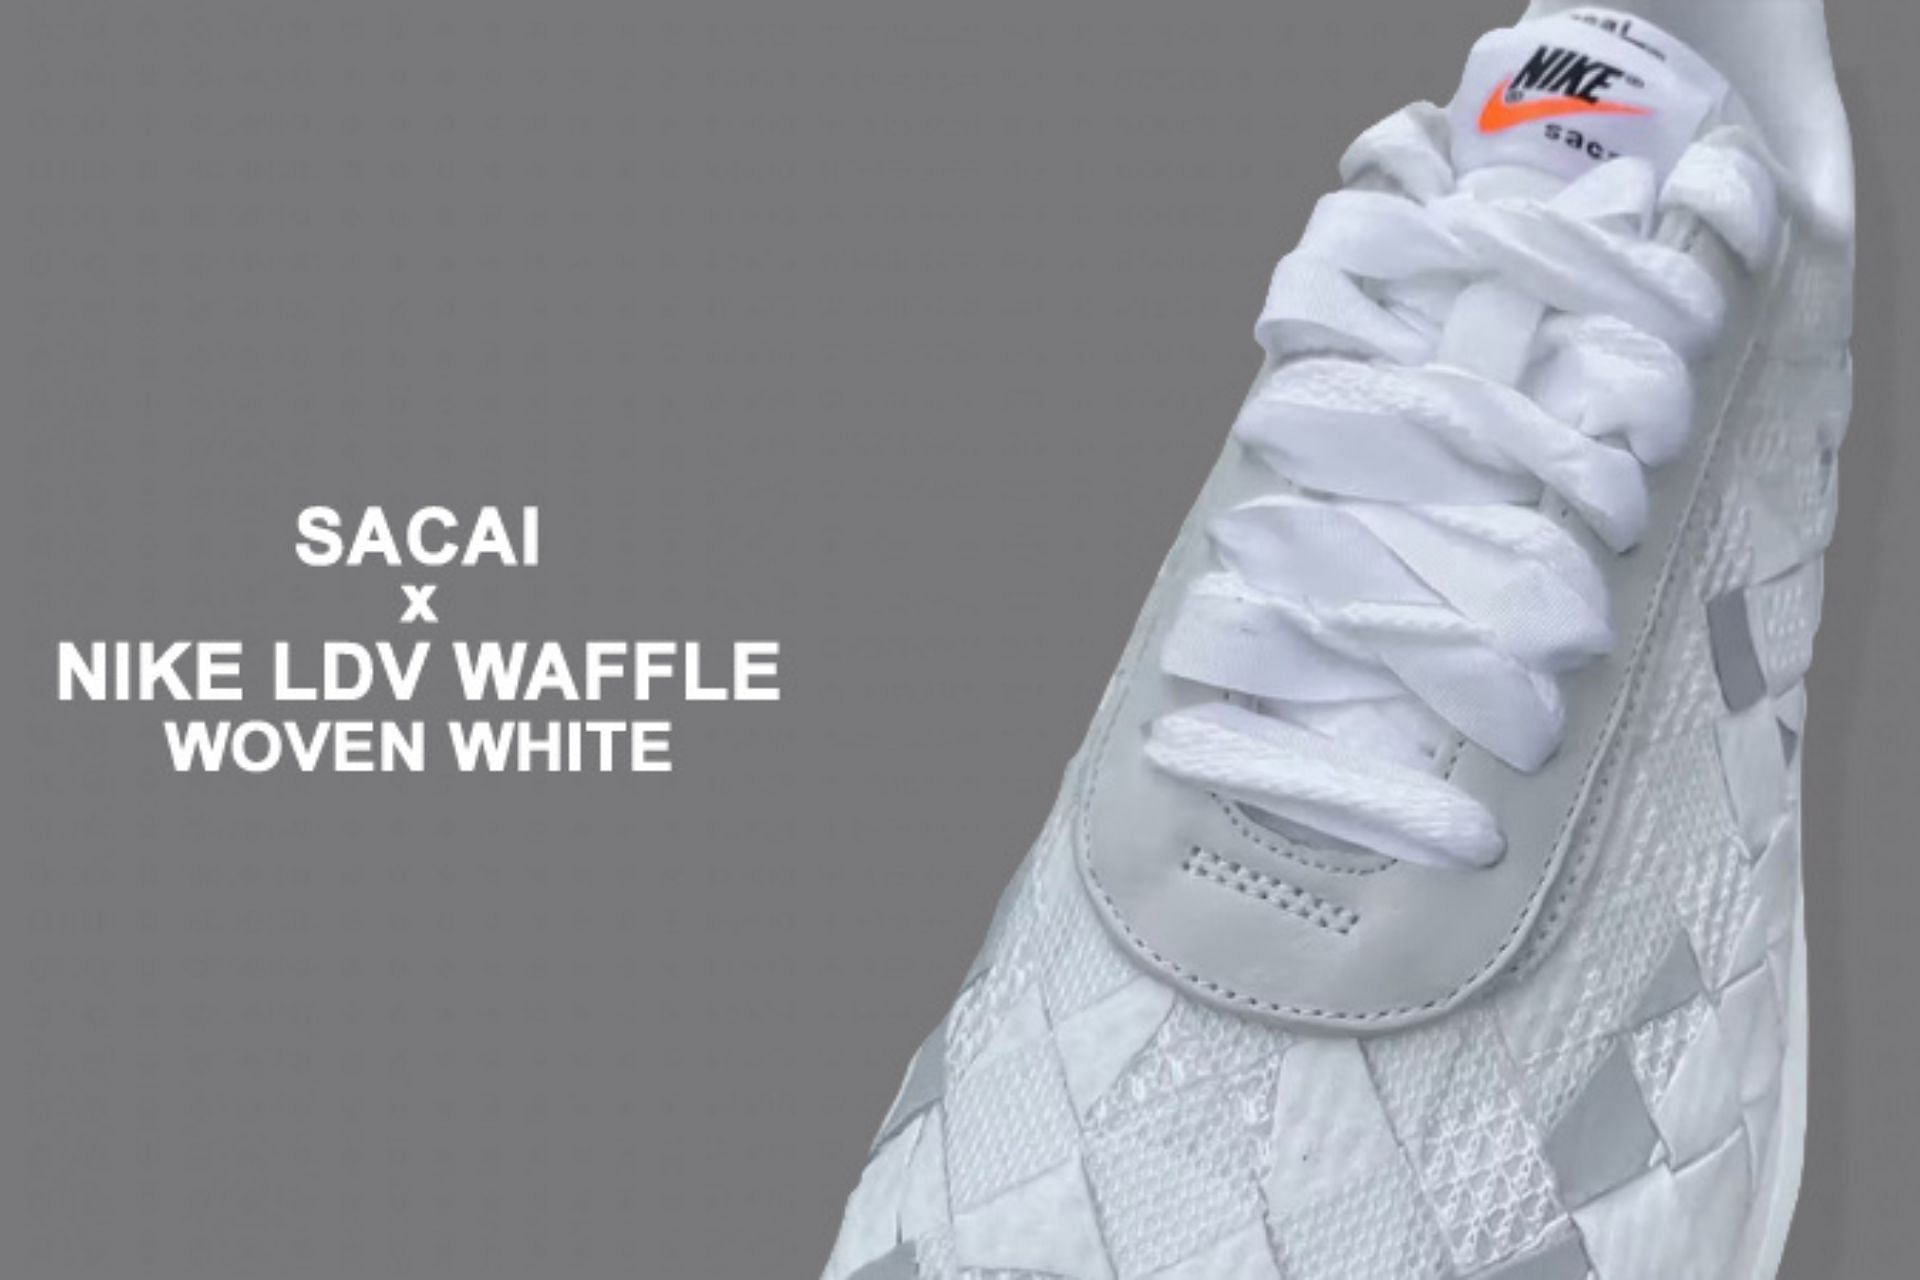 Sacai: Sacai x Nike Waffle Woven “White” shoes: Everything we know so far